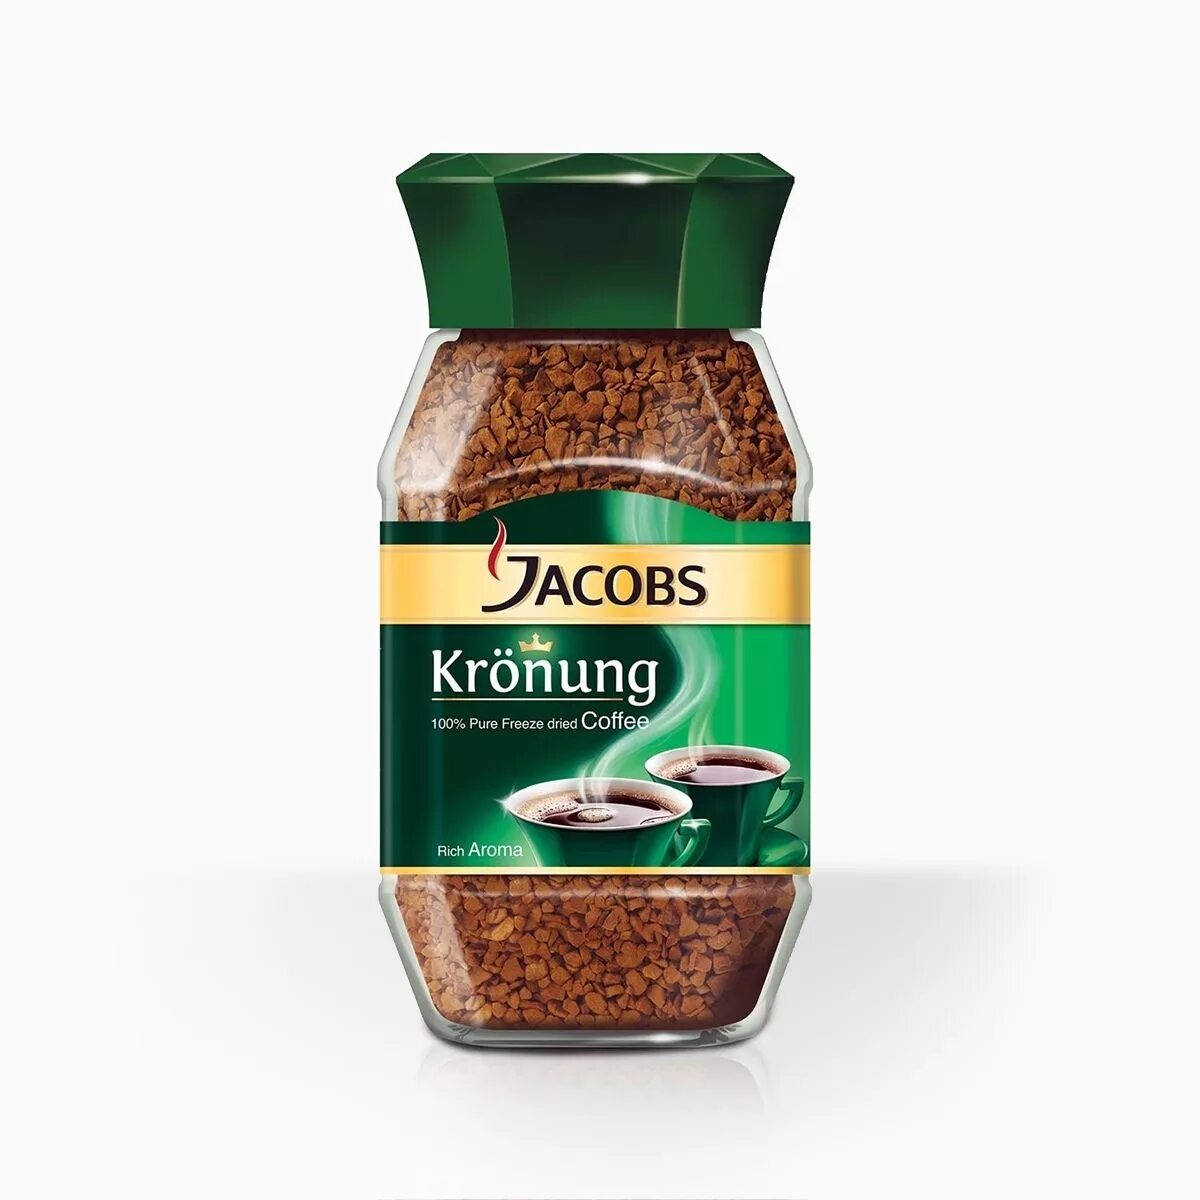 Кофе Якобс kraftig 200гр. Кофе Jacobs kraftig 200г. Jacobs Kronung 500g. Кофе Jacobs Krönung 200. Якобс кофе хорошее кофе